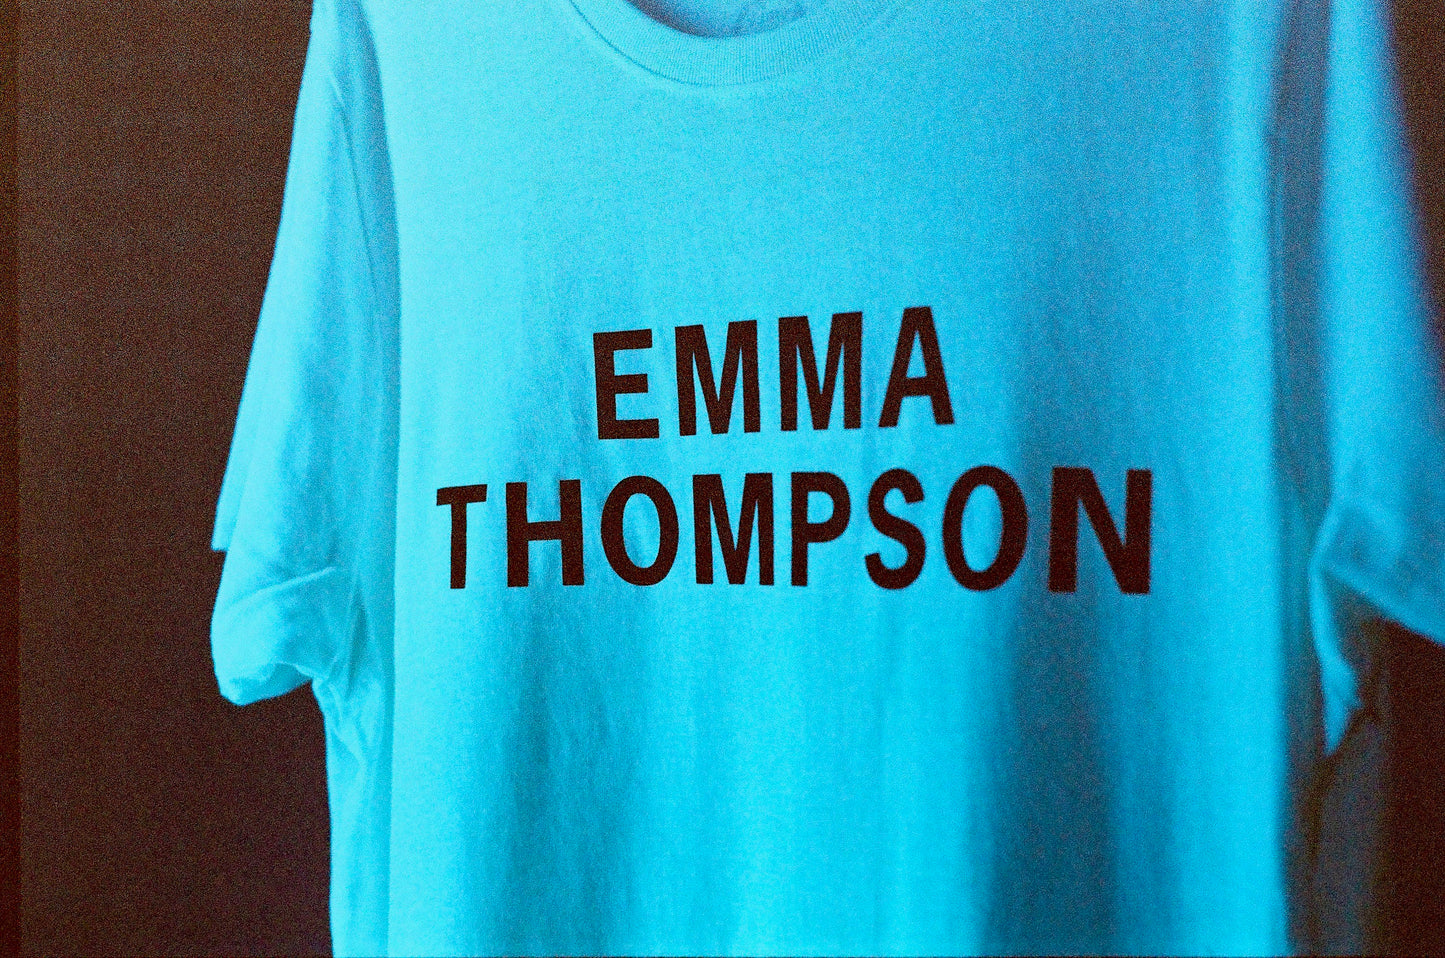 EMMA THOMPSON